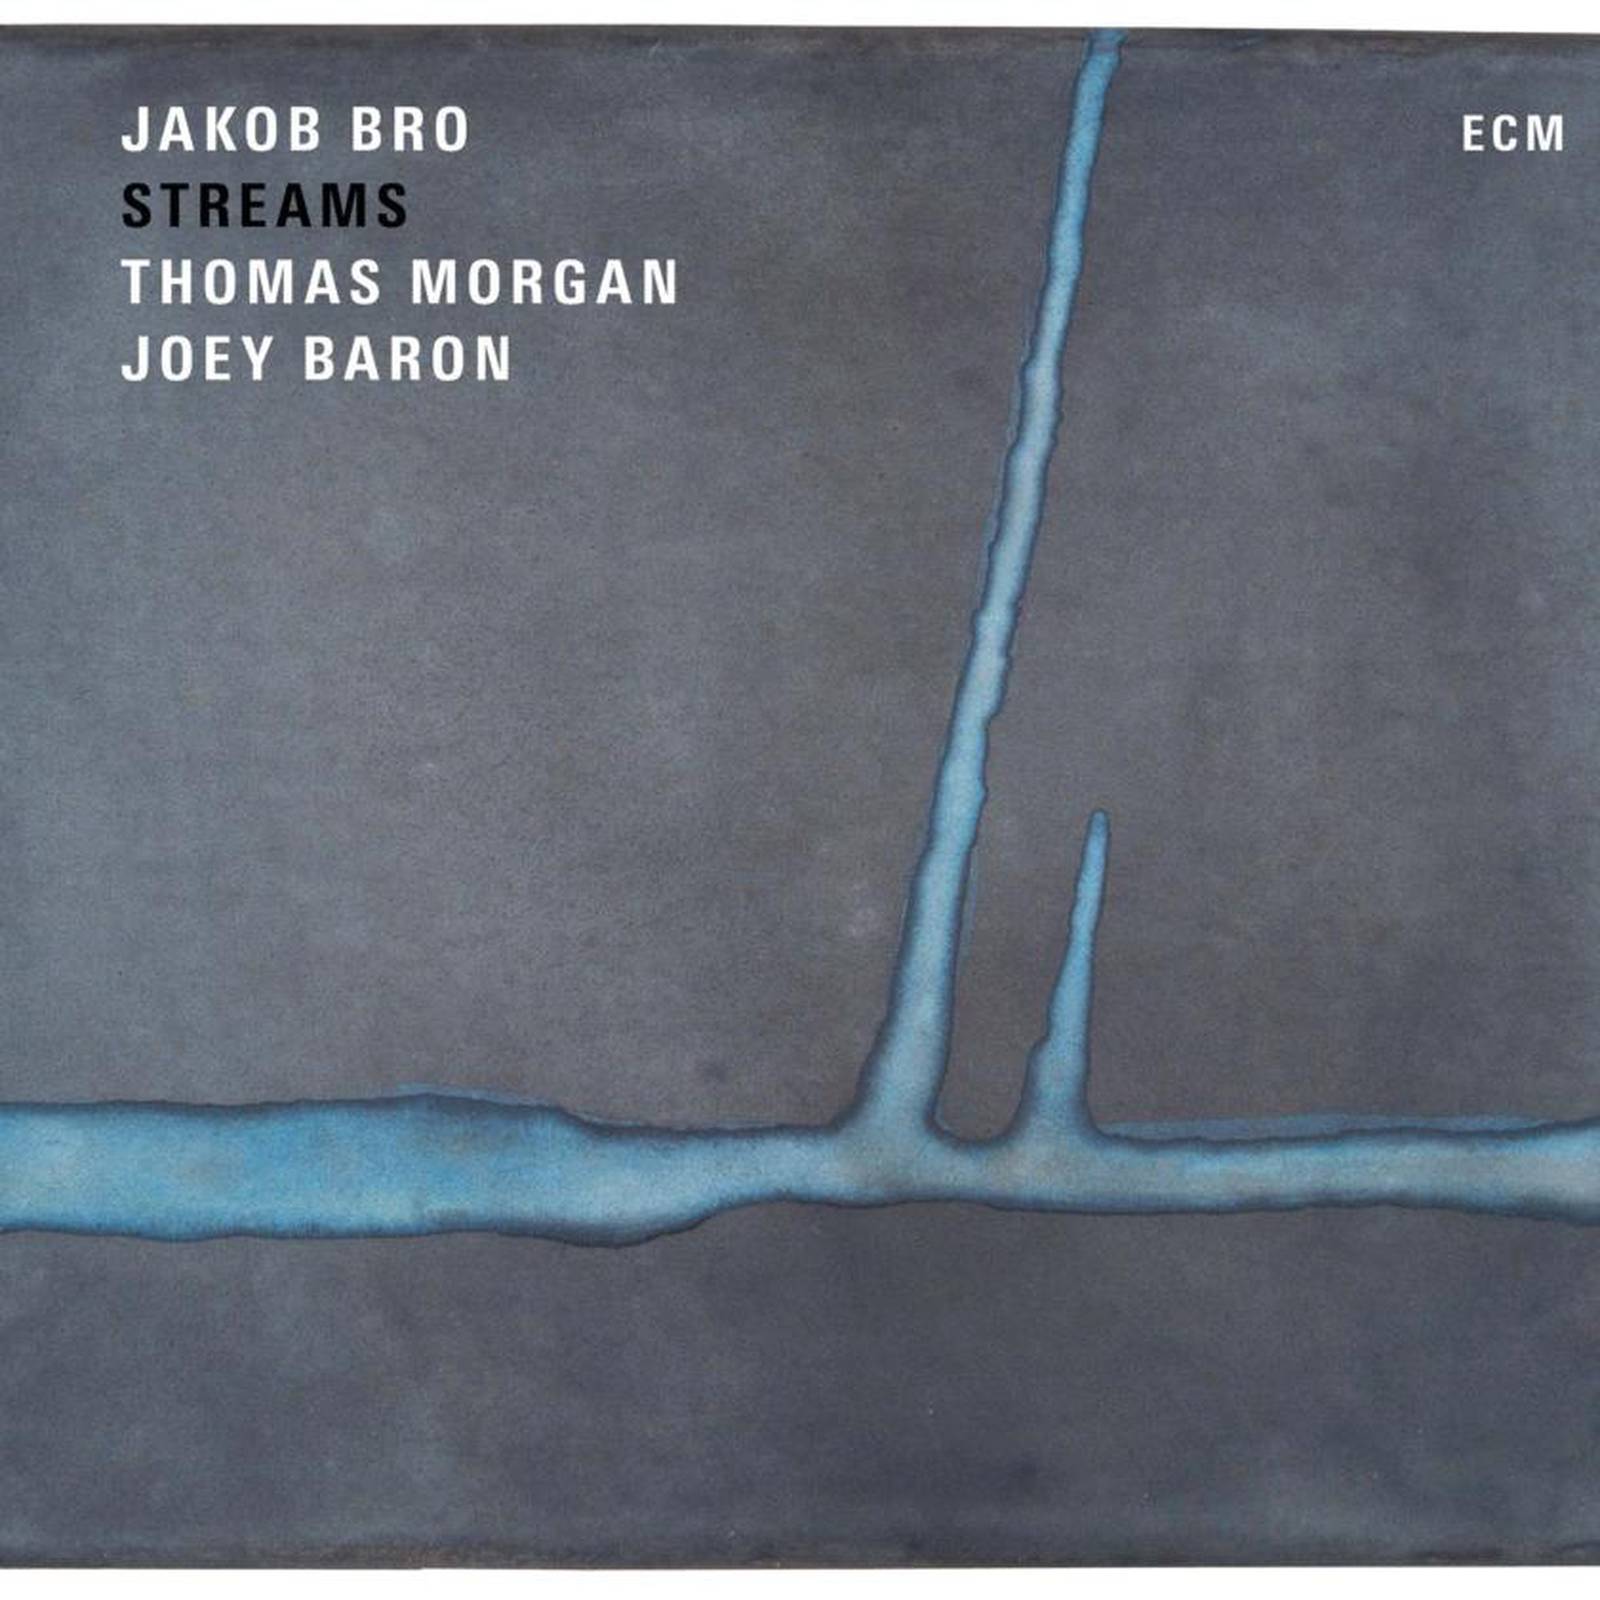 Jakob bro â streams album review dark but beautiful â the irish times